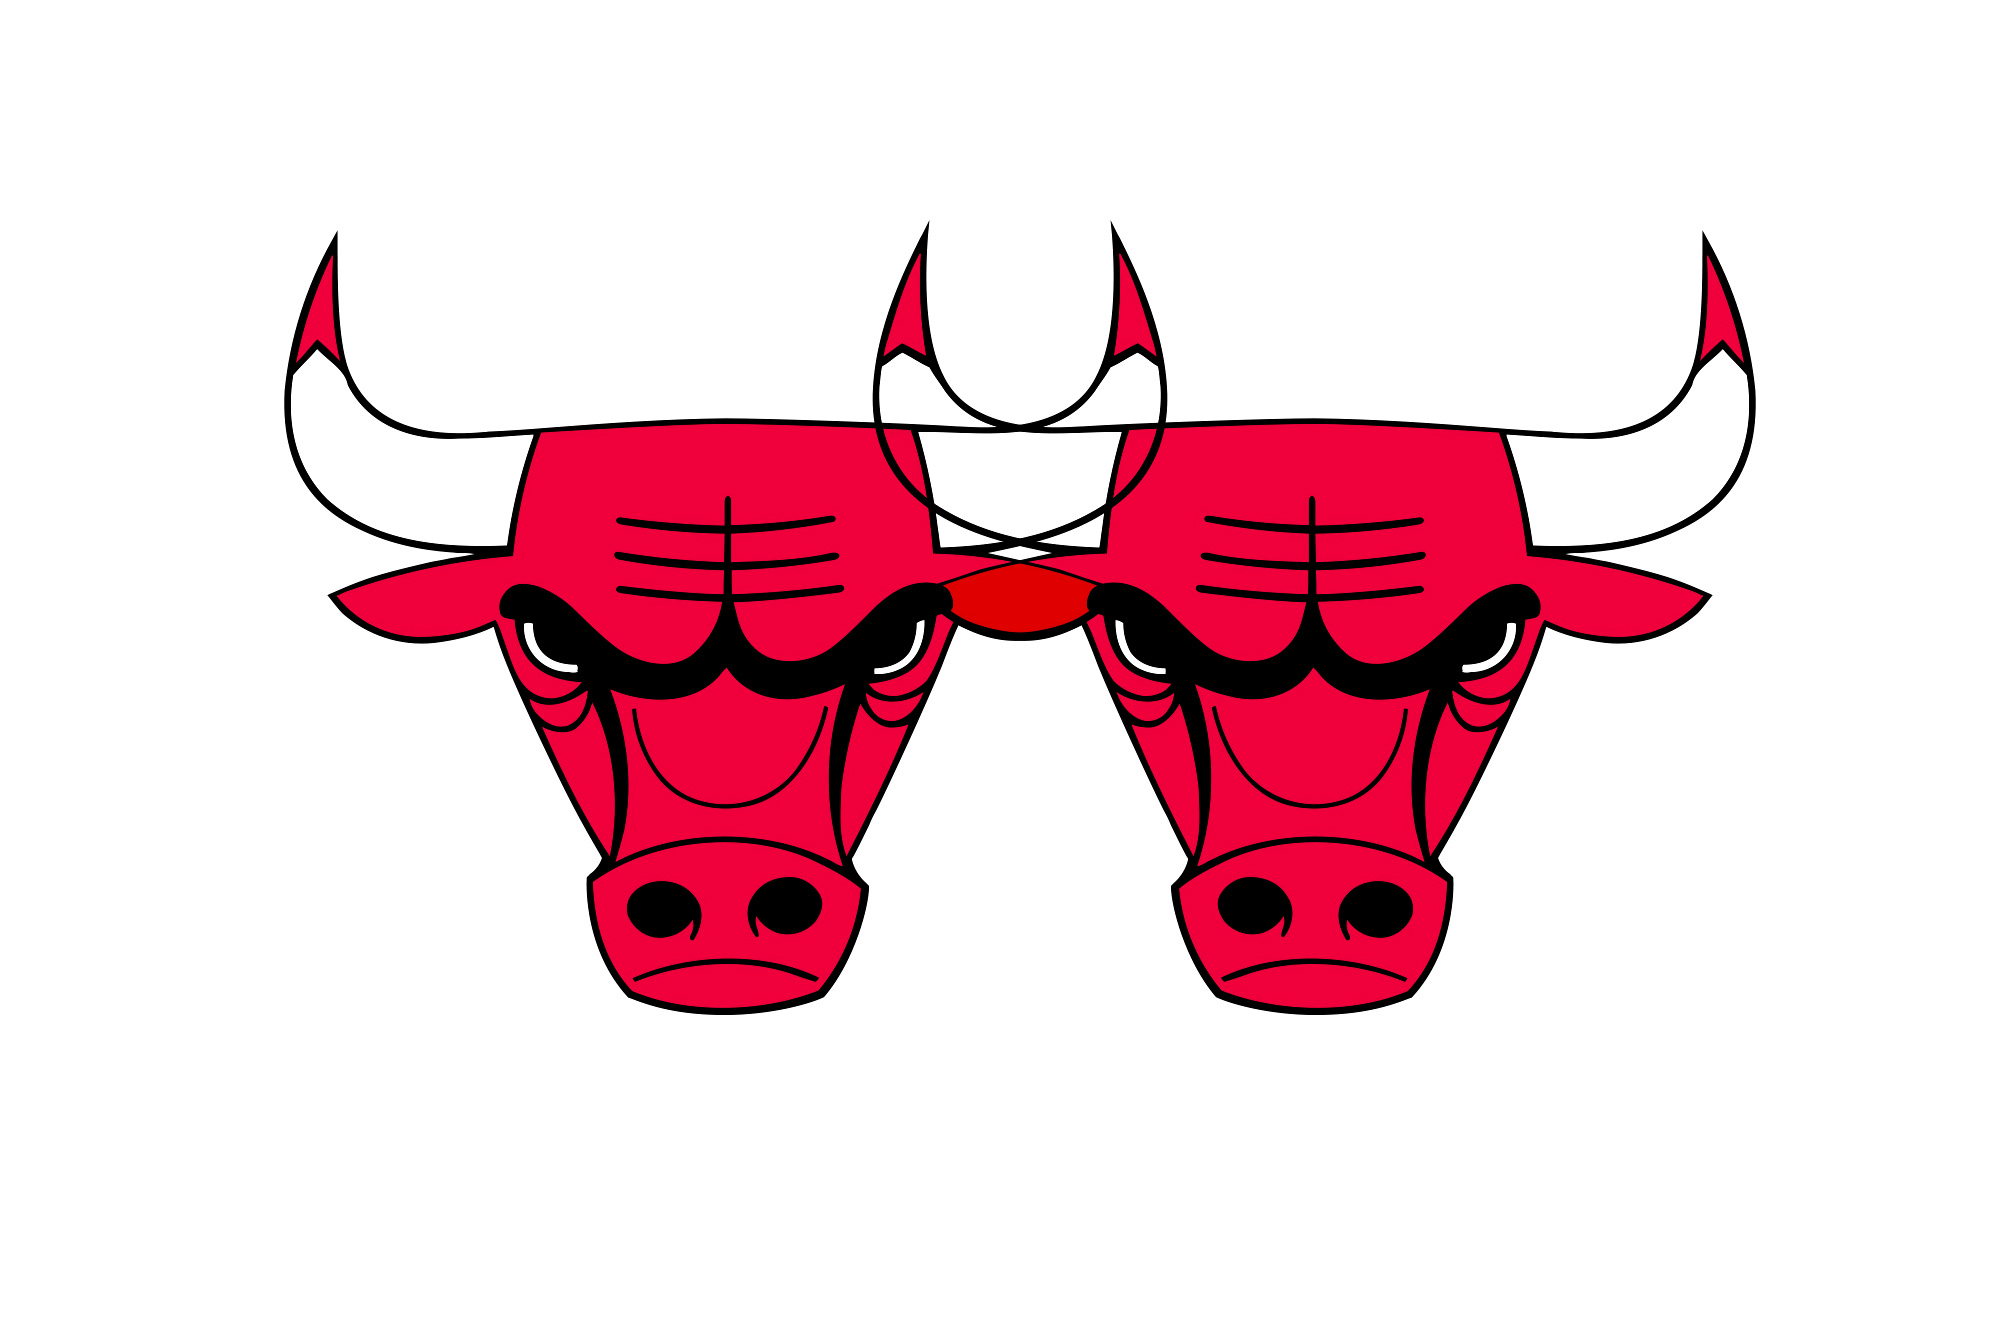 Da Bulls: Whodunit?